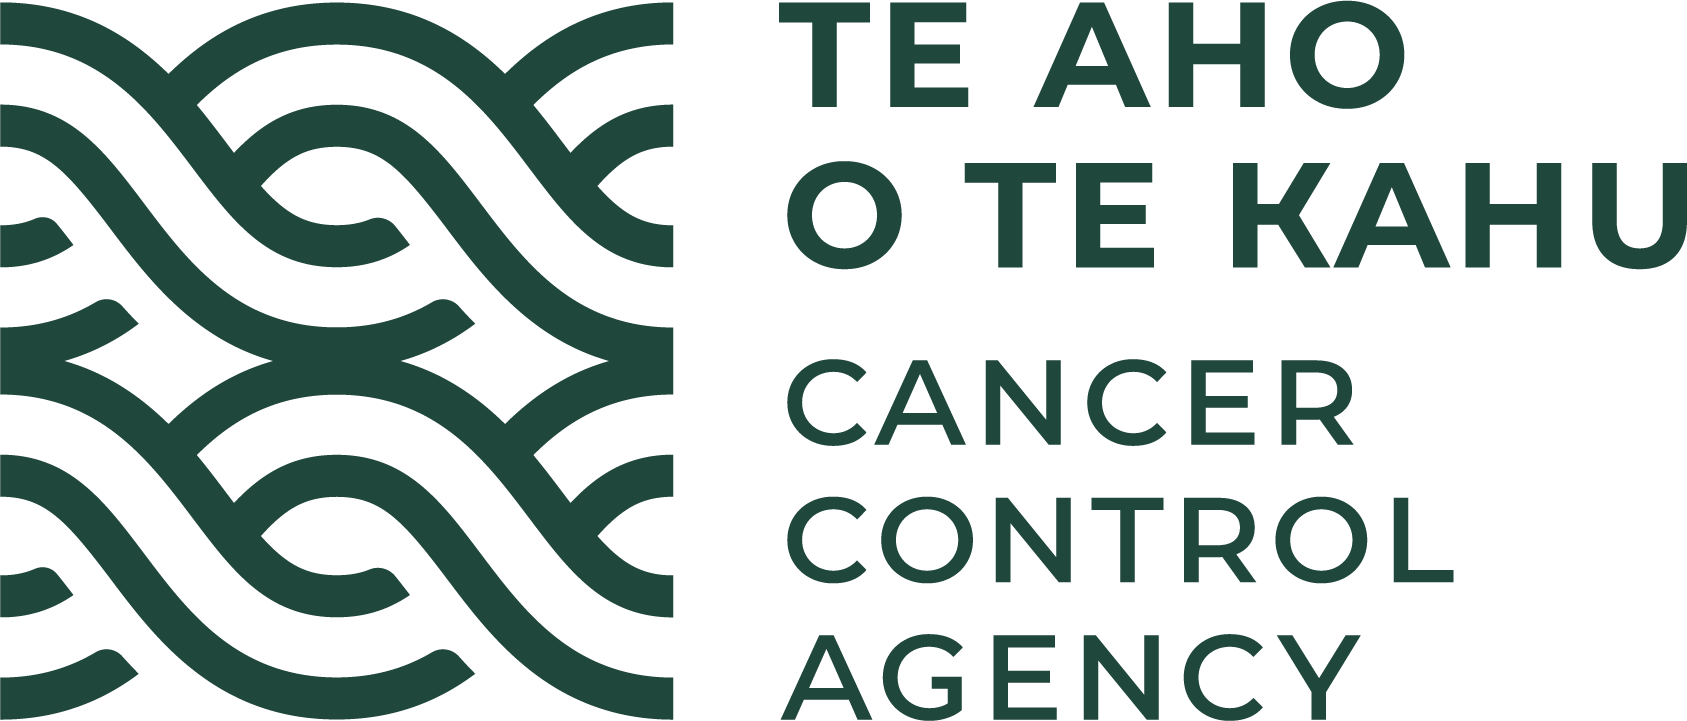 Cancer Control Agency